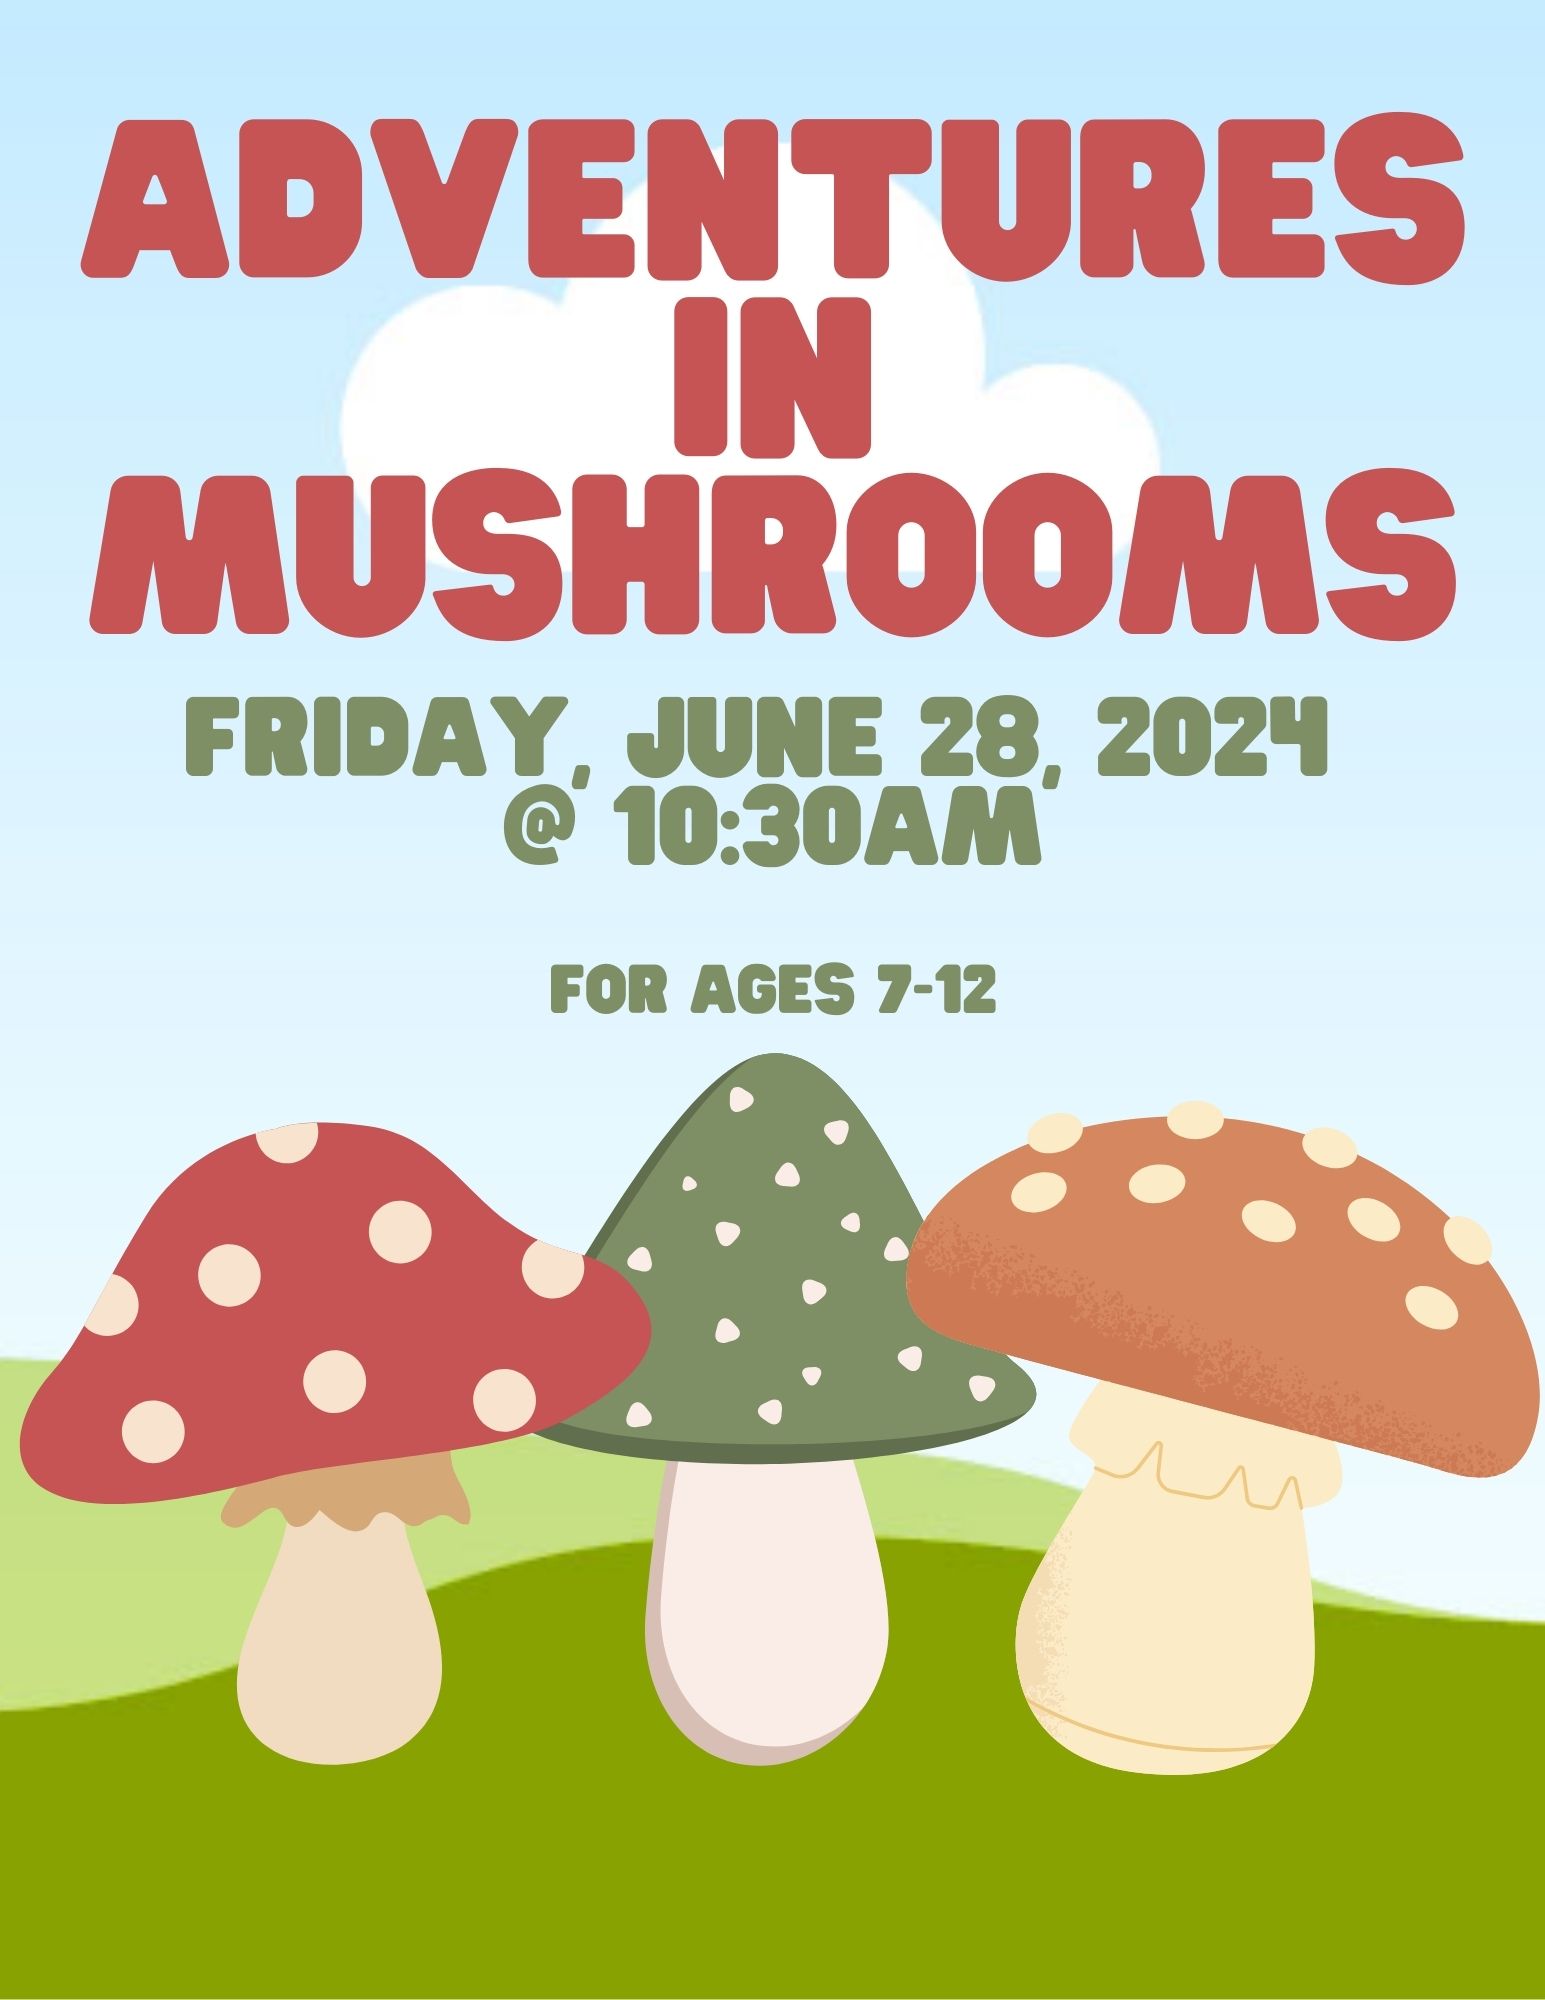 adventures in mushrooms for kids friday june 28 2024 @ 10:30am